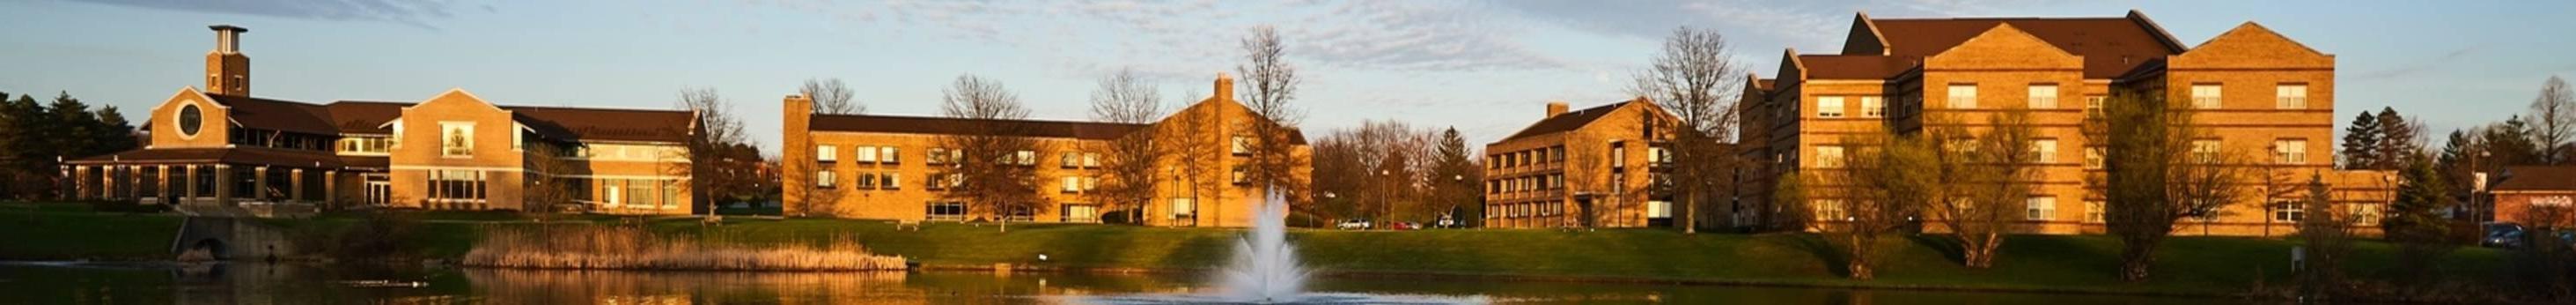 Ursuline college campus reflected in water